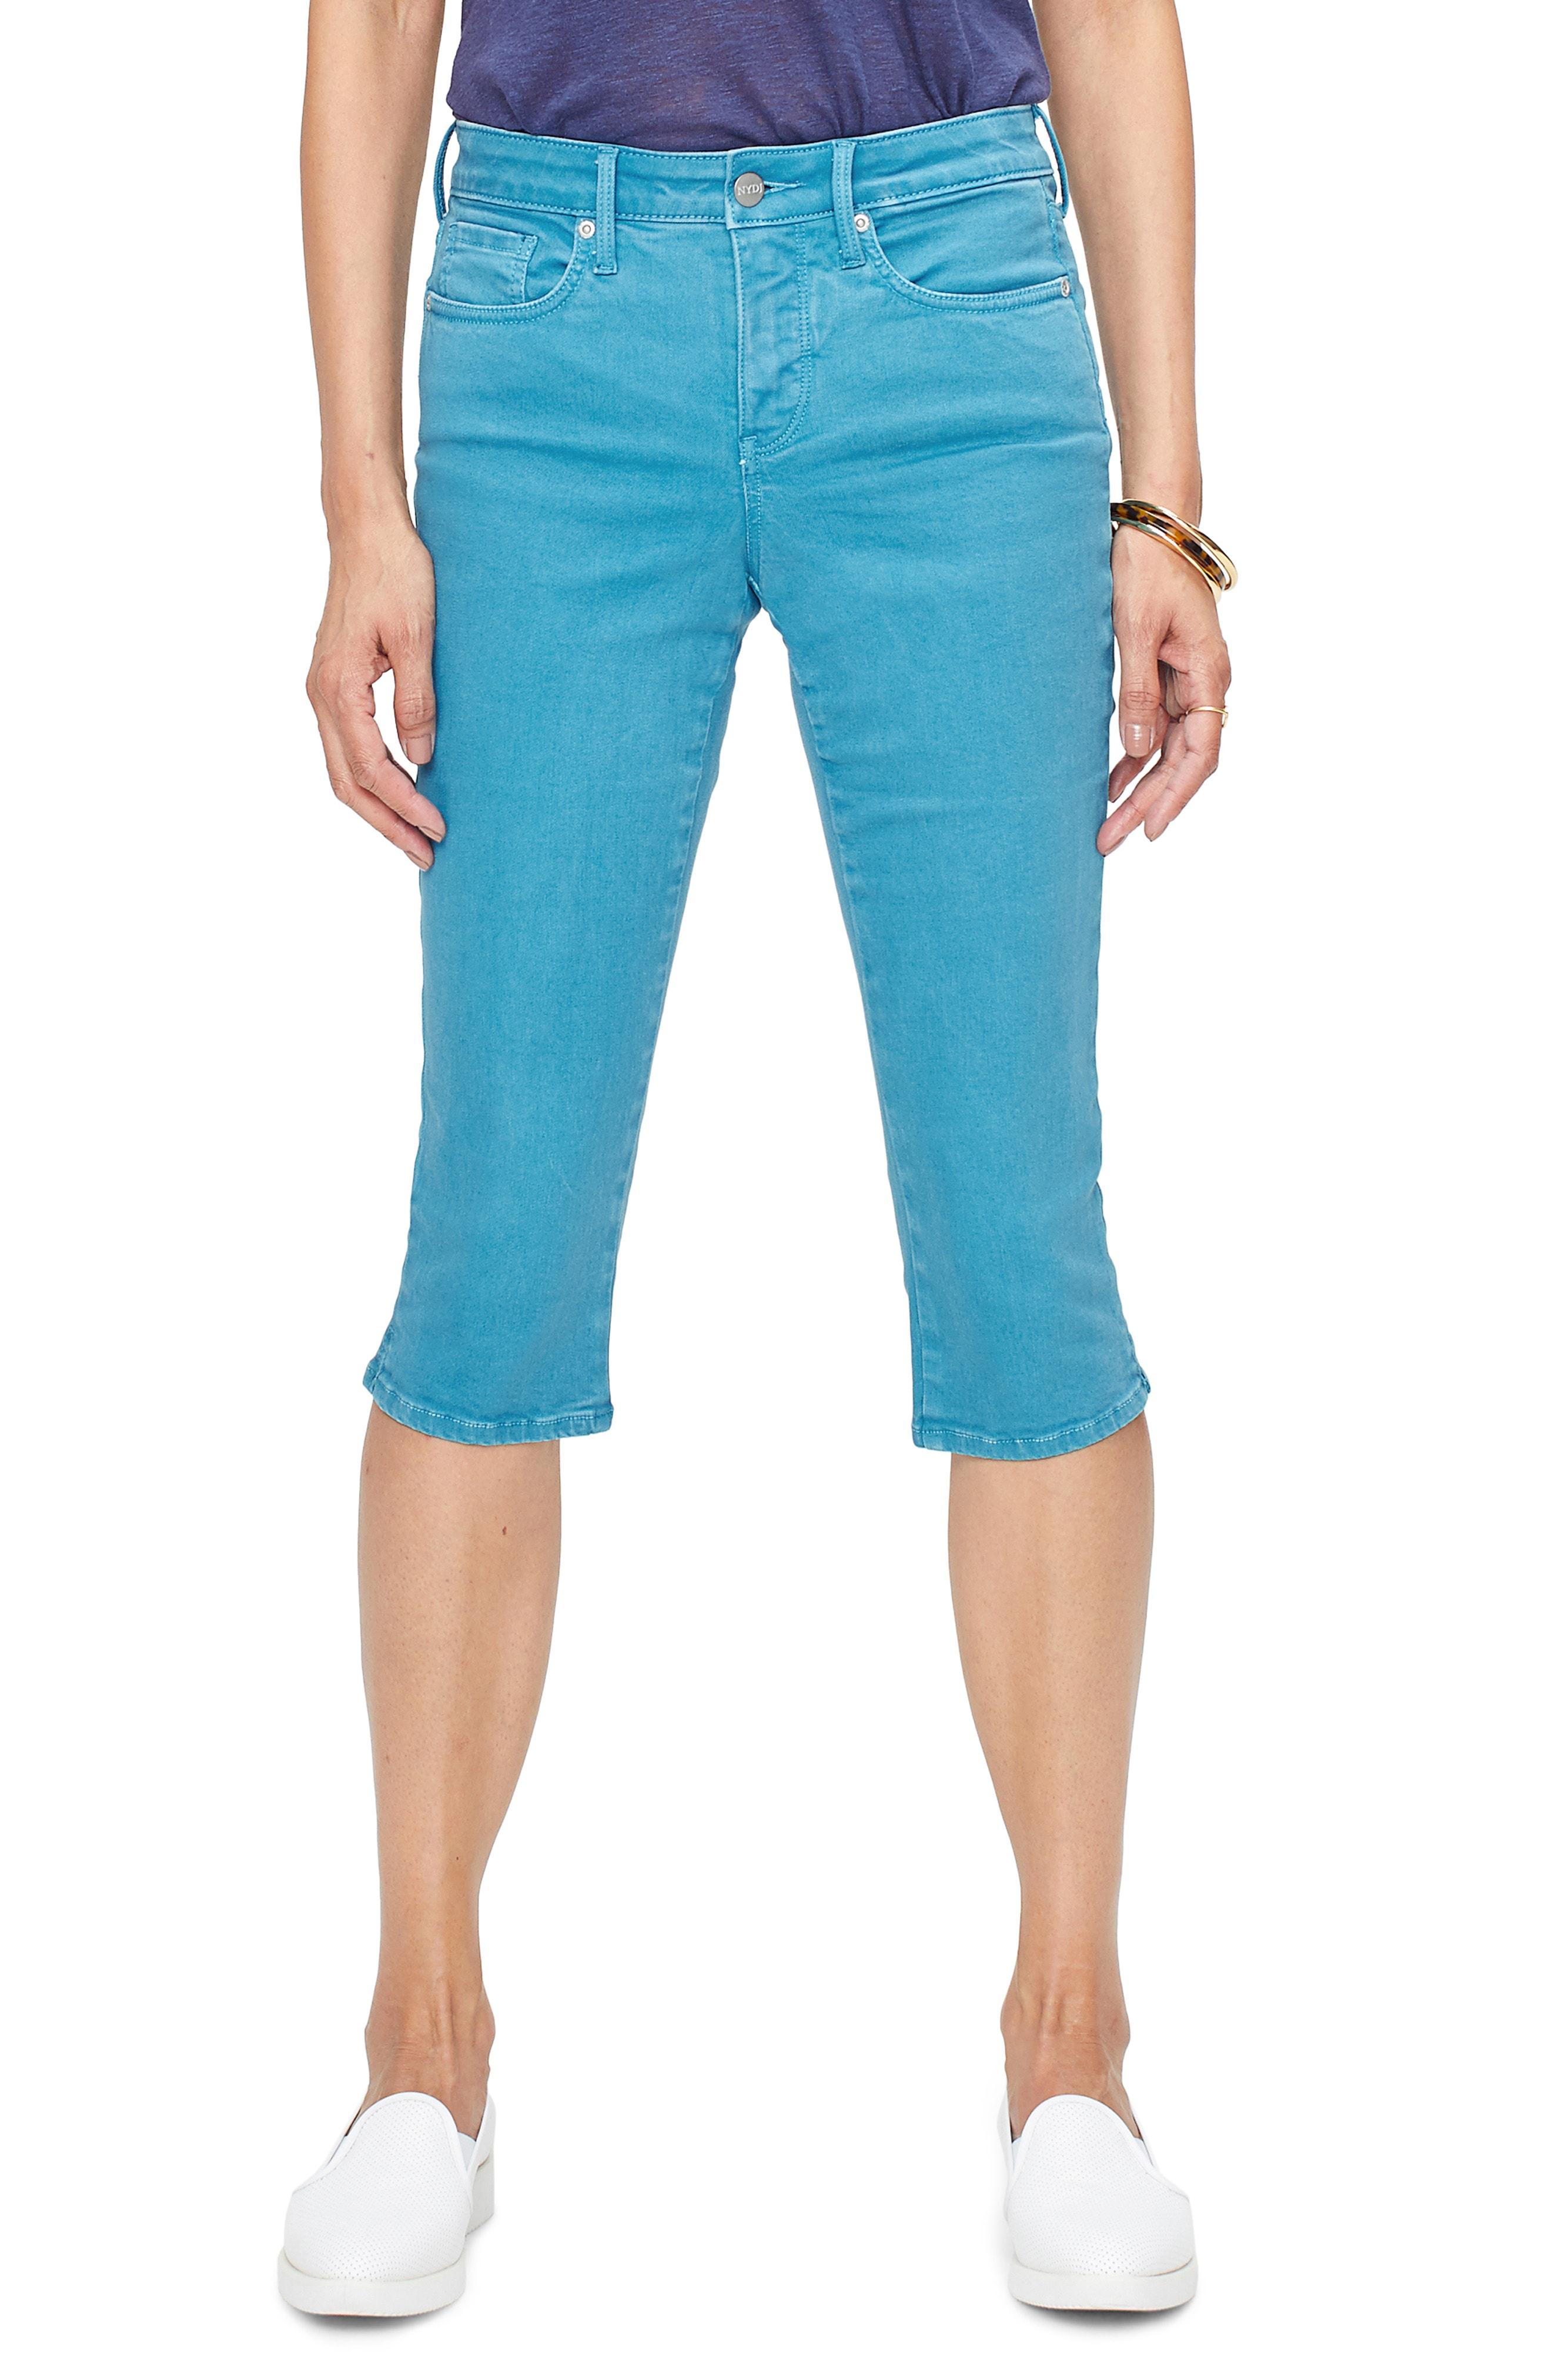 Lyst - NYDJ Capri Skinny Jeans in Blue